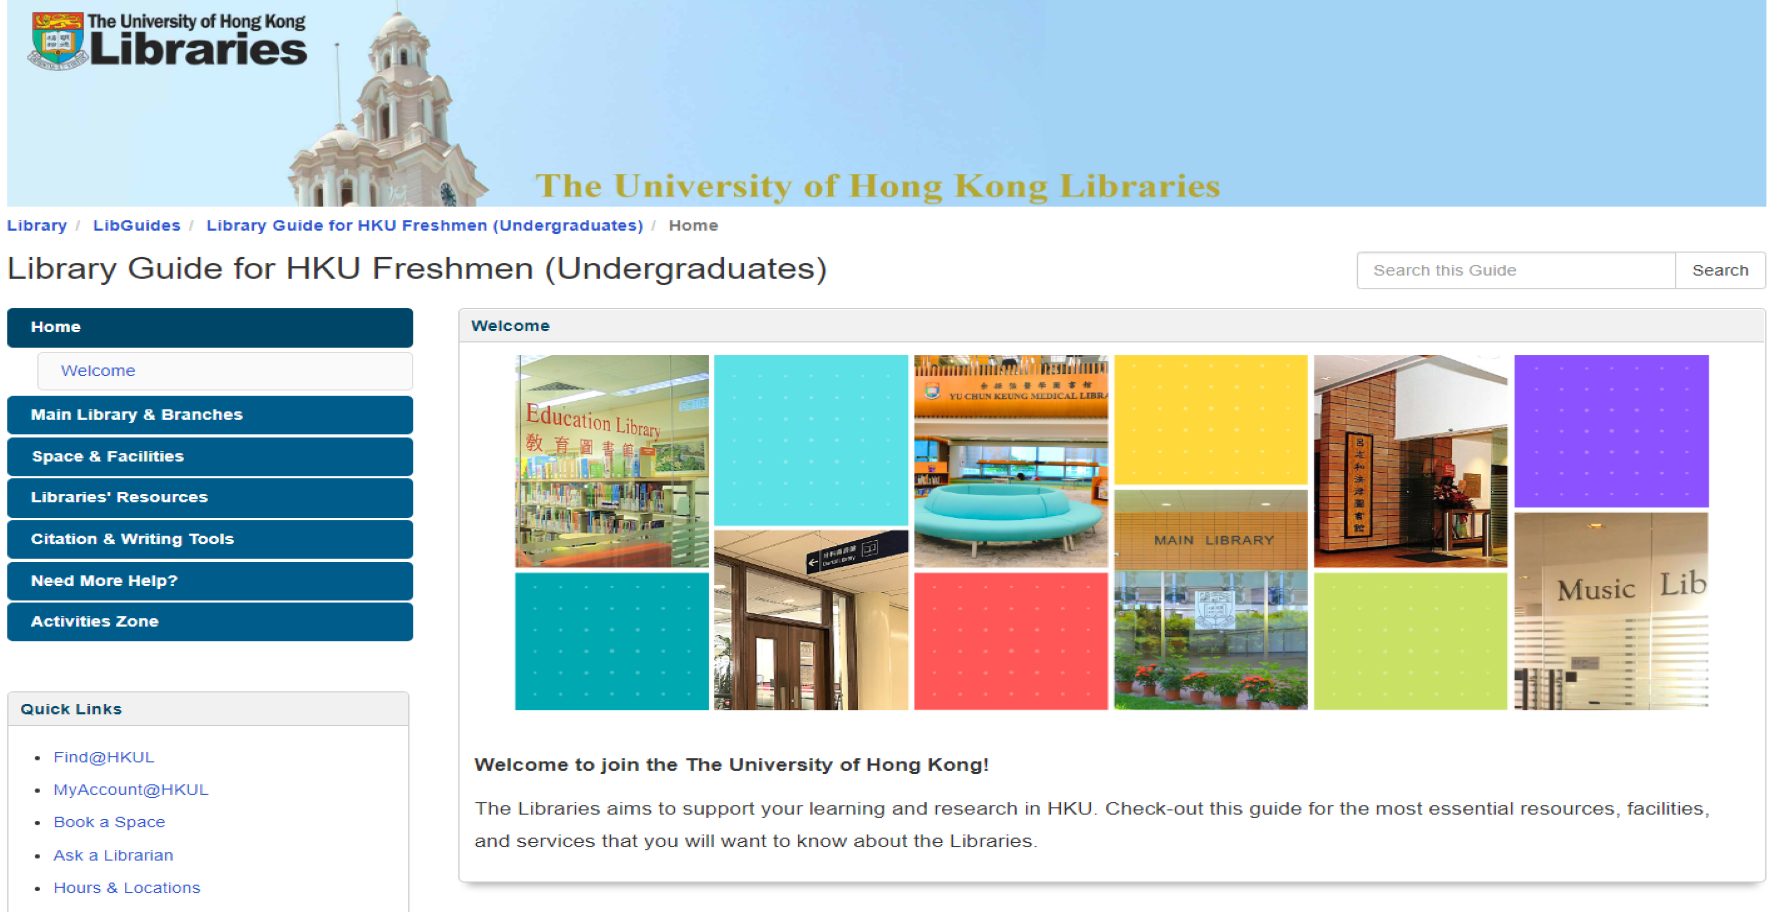 Library Guide for HKU Freshmen (Undergraduates)